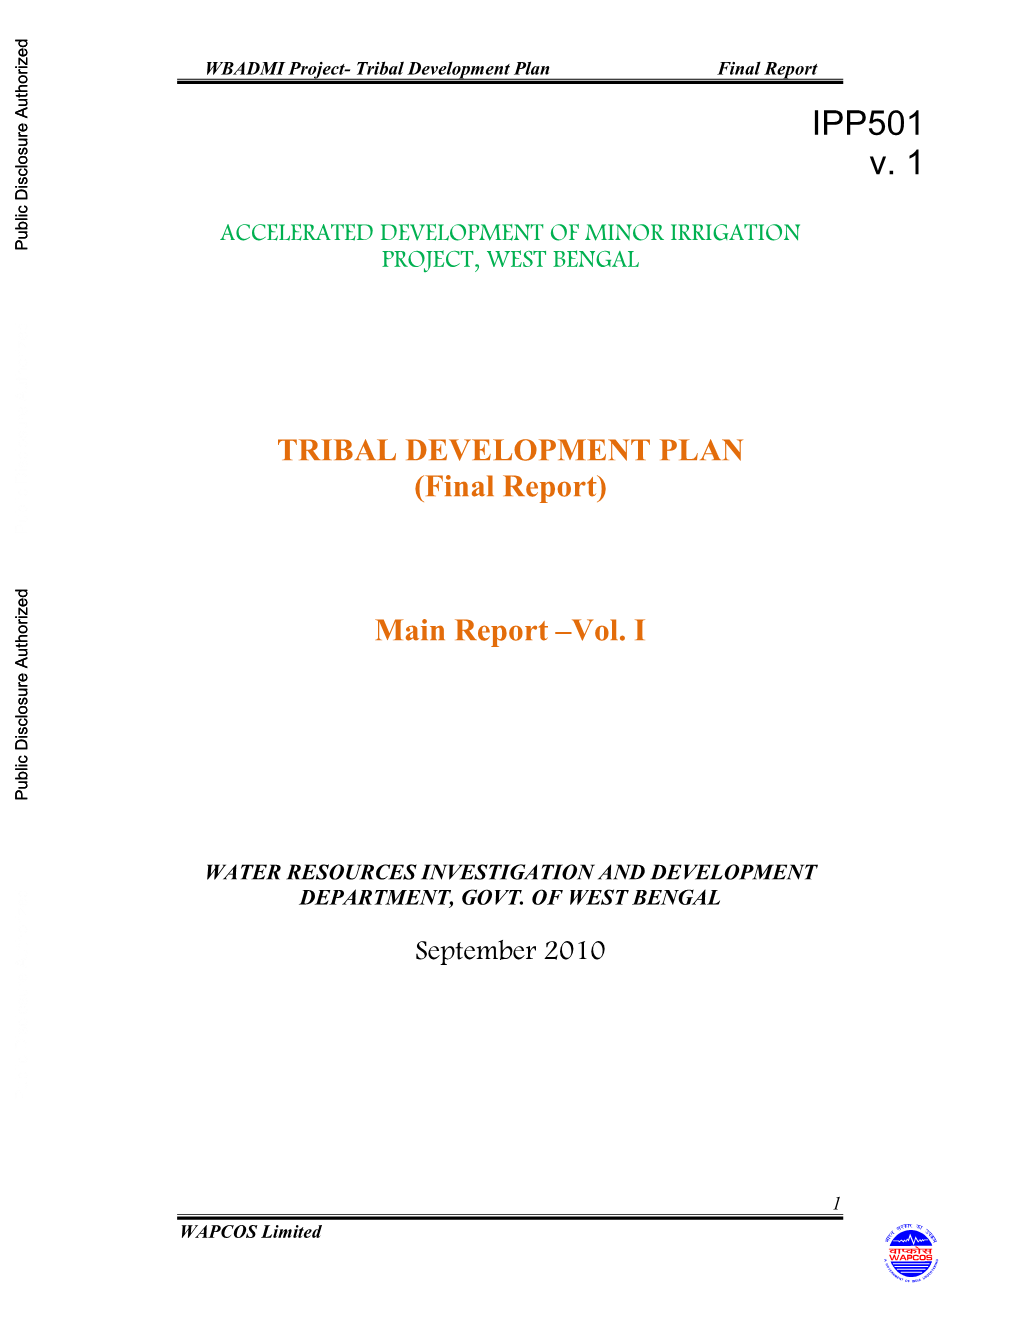 Tribal Development Plan Final Report